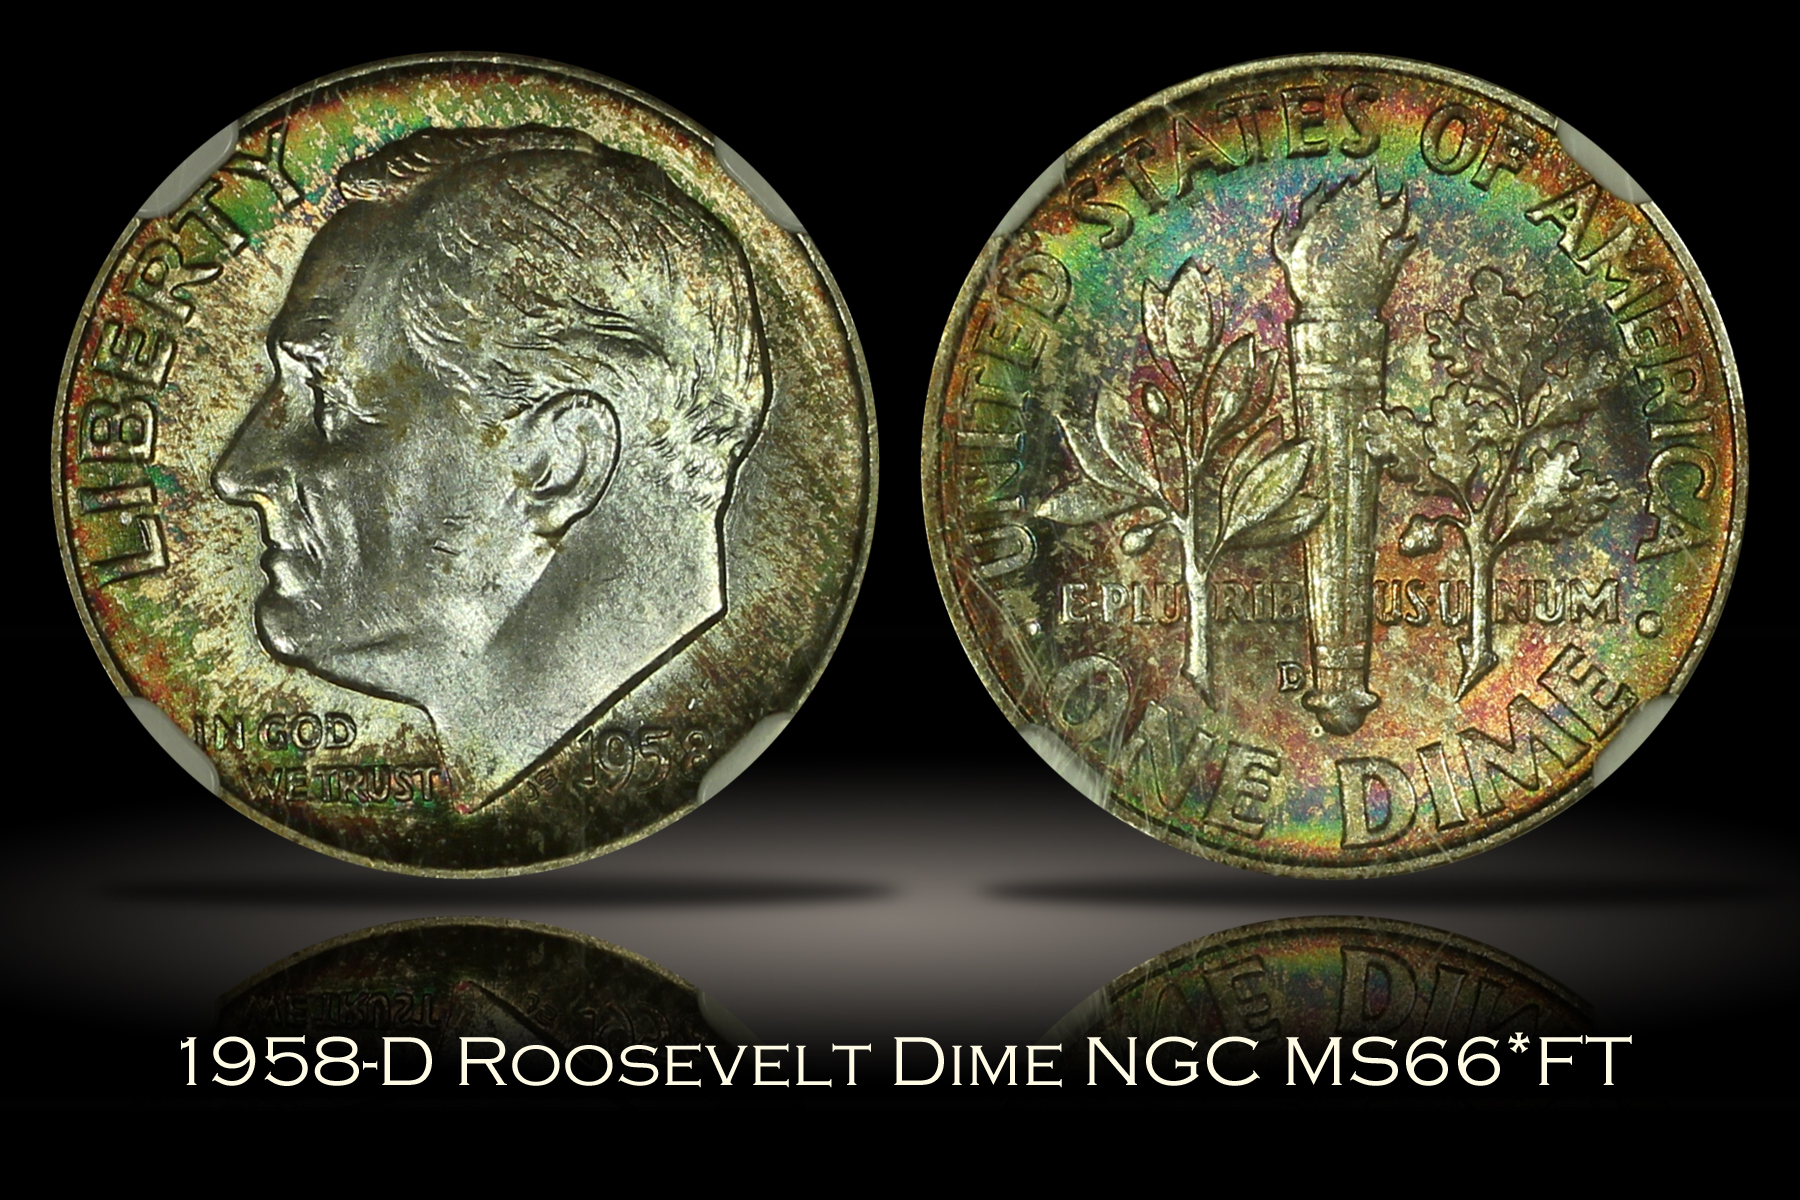 1958-D Roosevelt Dime NGC MS66*FT